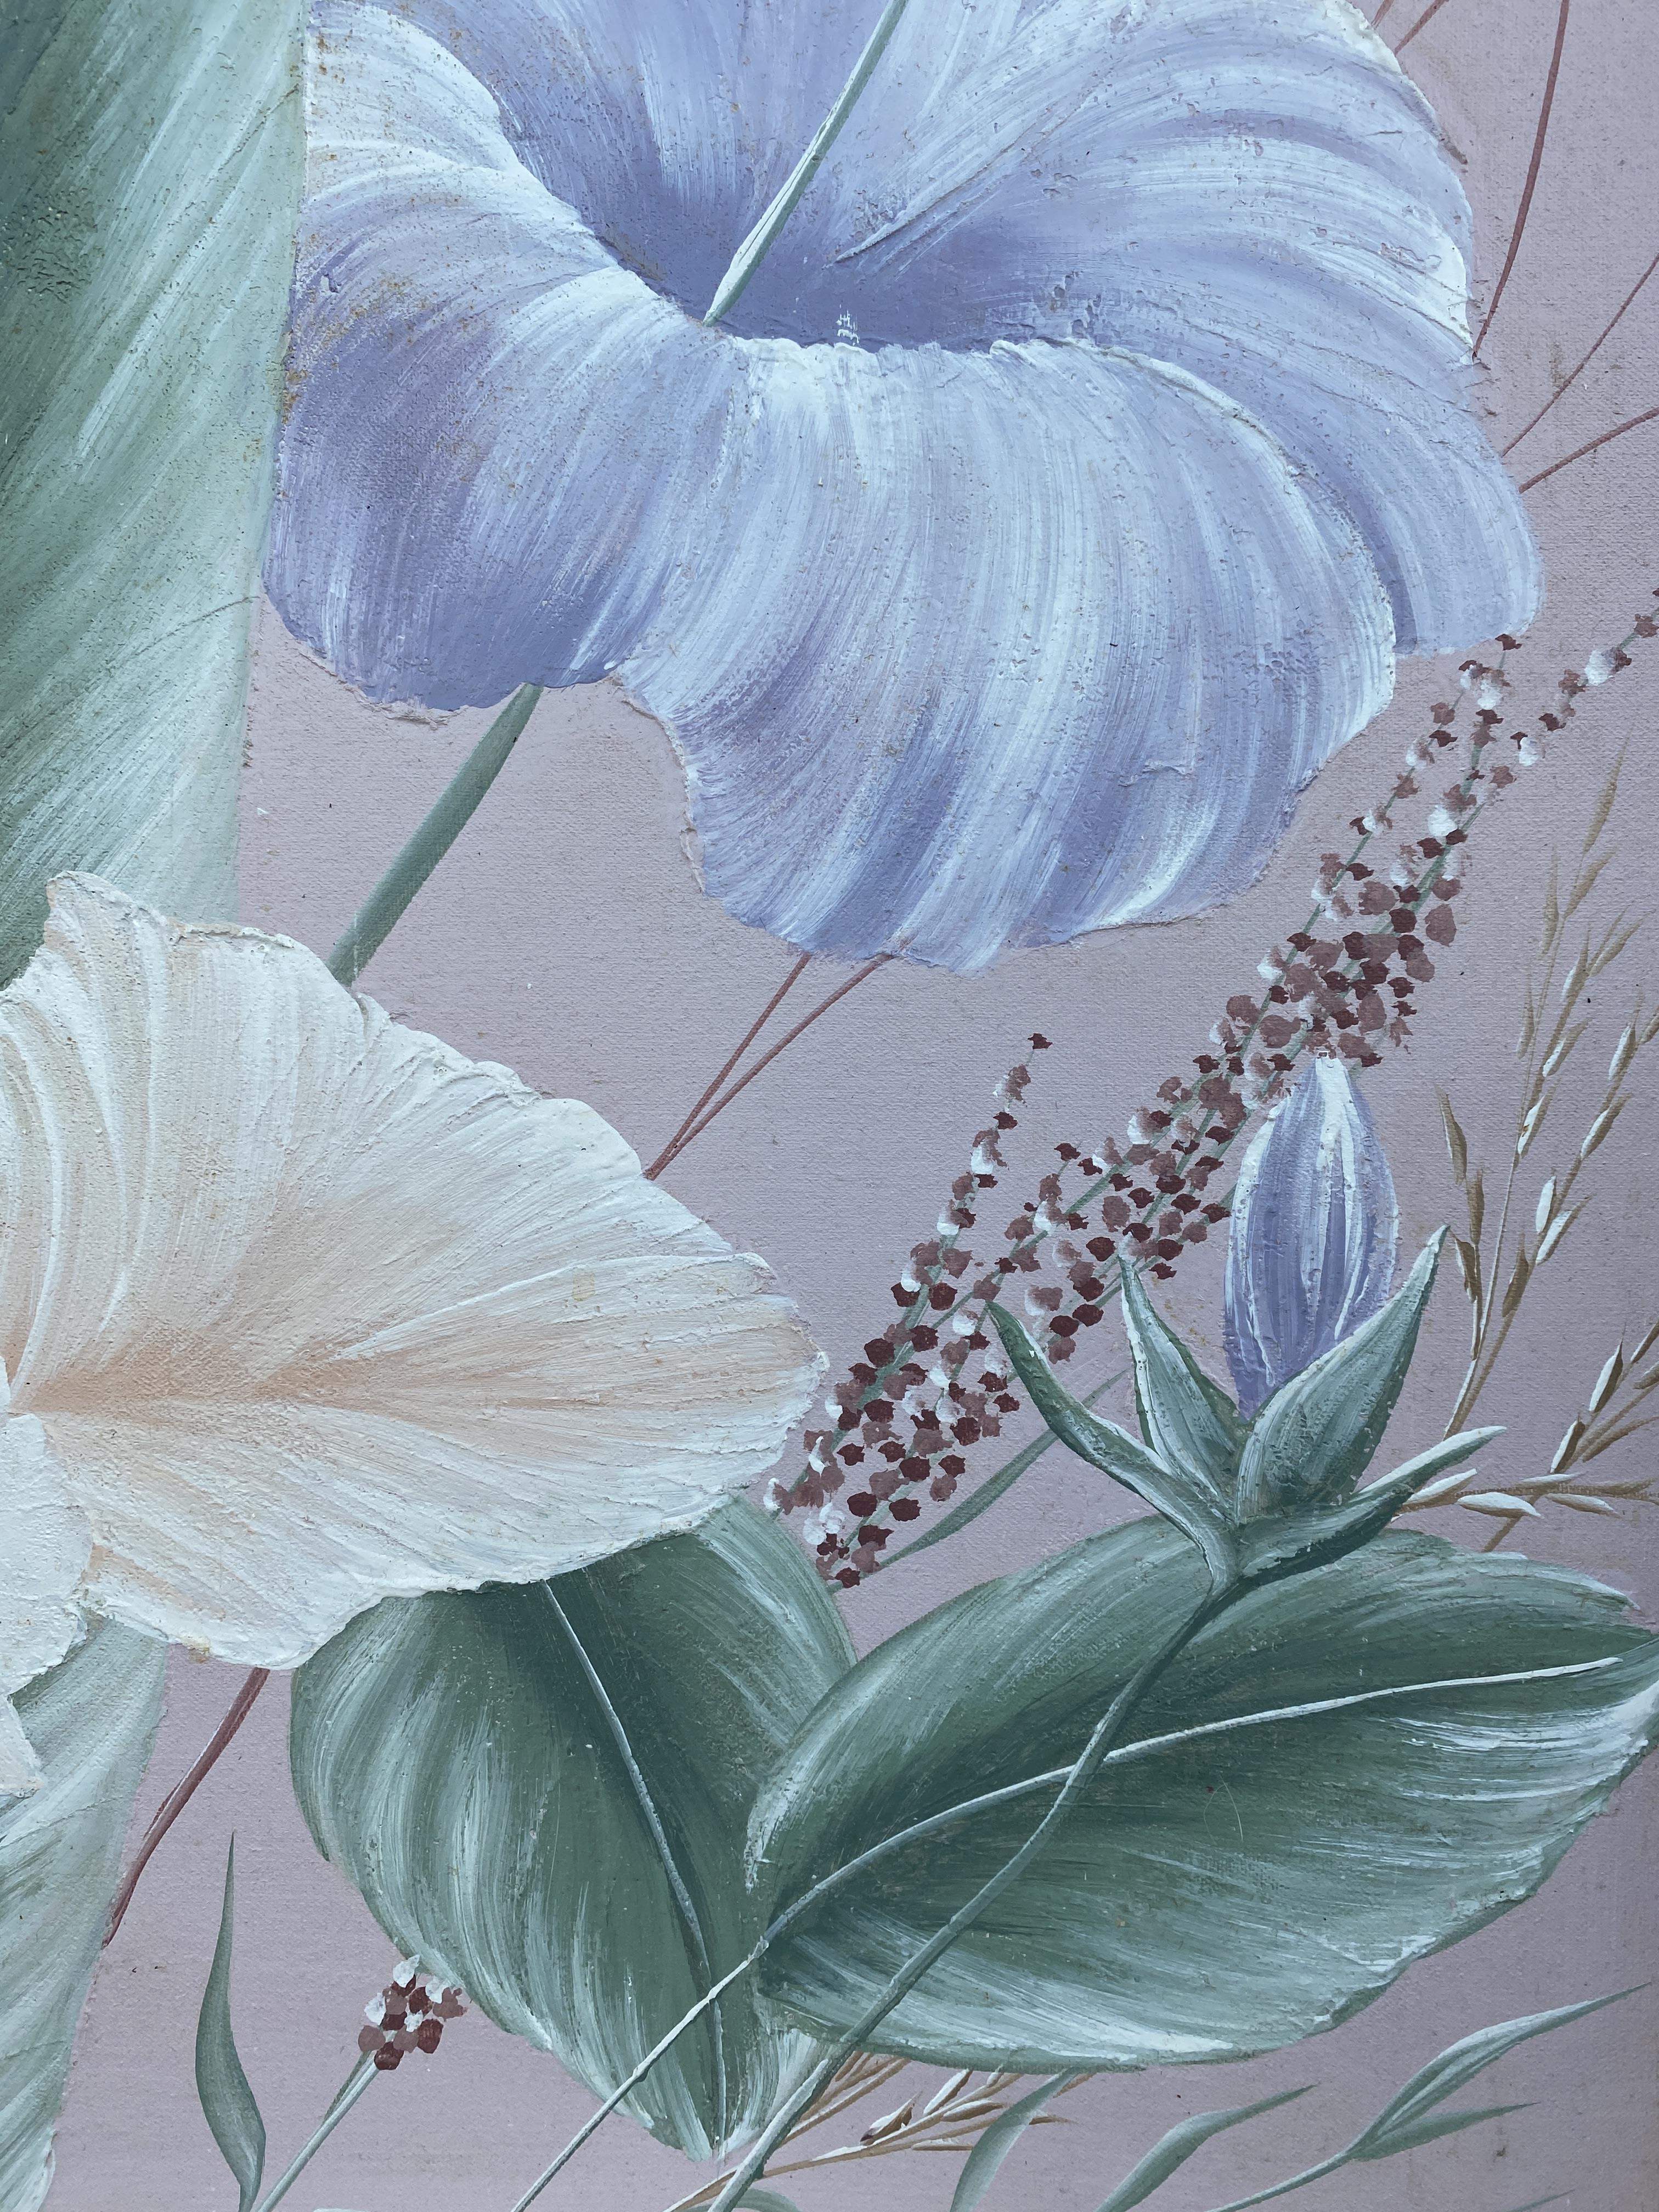 Floral Garden, Original Oil on Canvas - Image 19 of 21